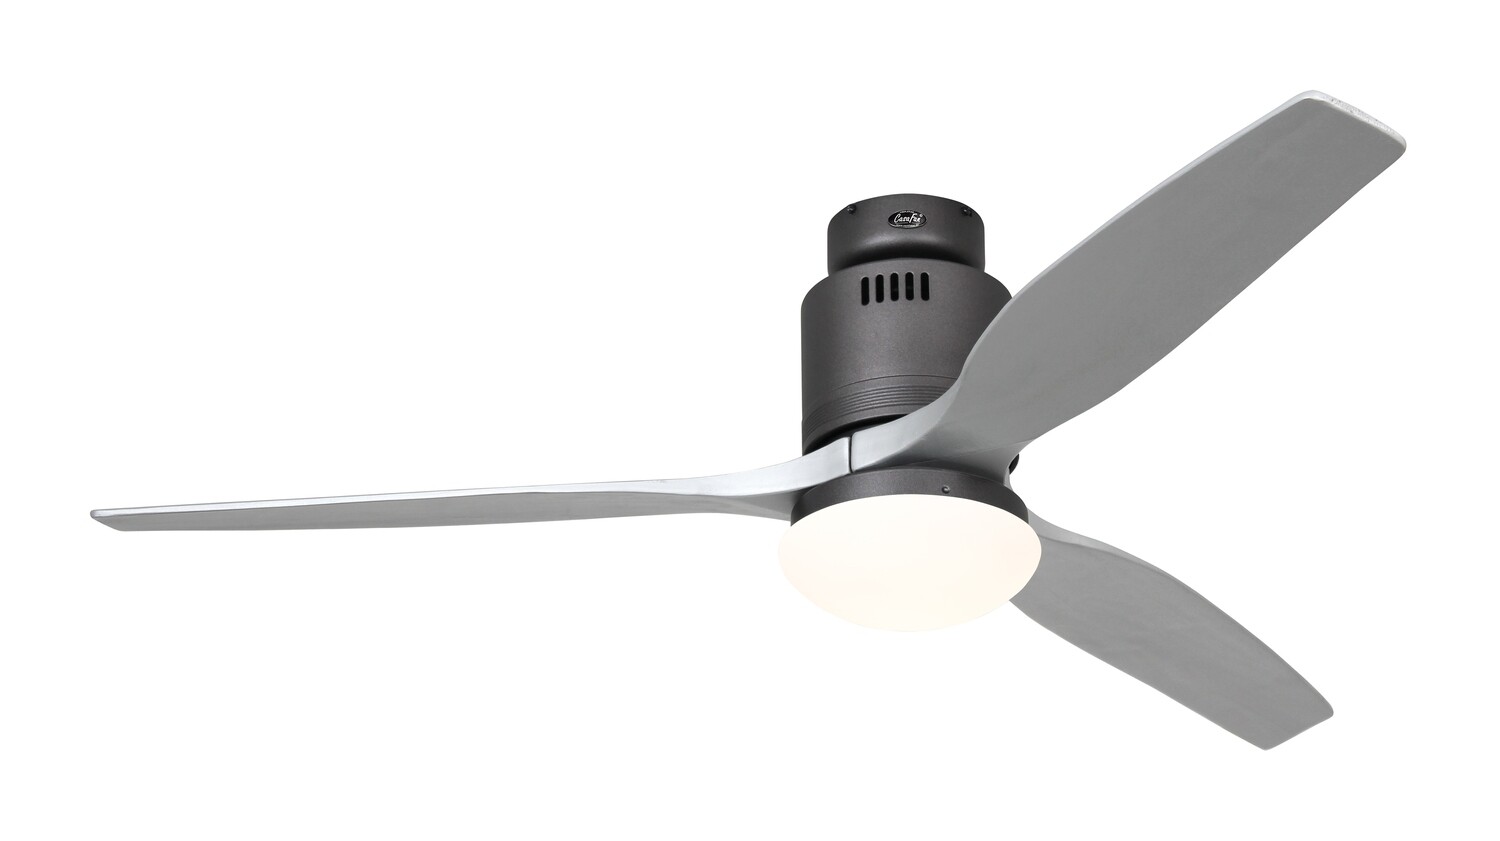 AERODYNAMIX ECO BG energy saving ceiling fan by CASAFAN Ø132 with light kit and remote control included - Basalt Grey /Silver grey